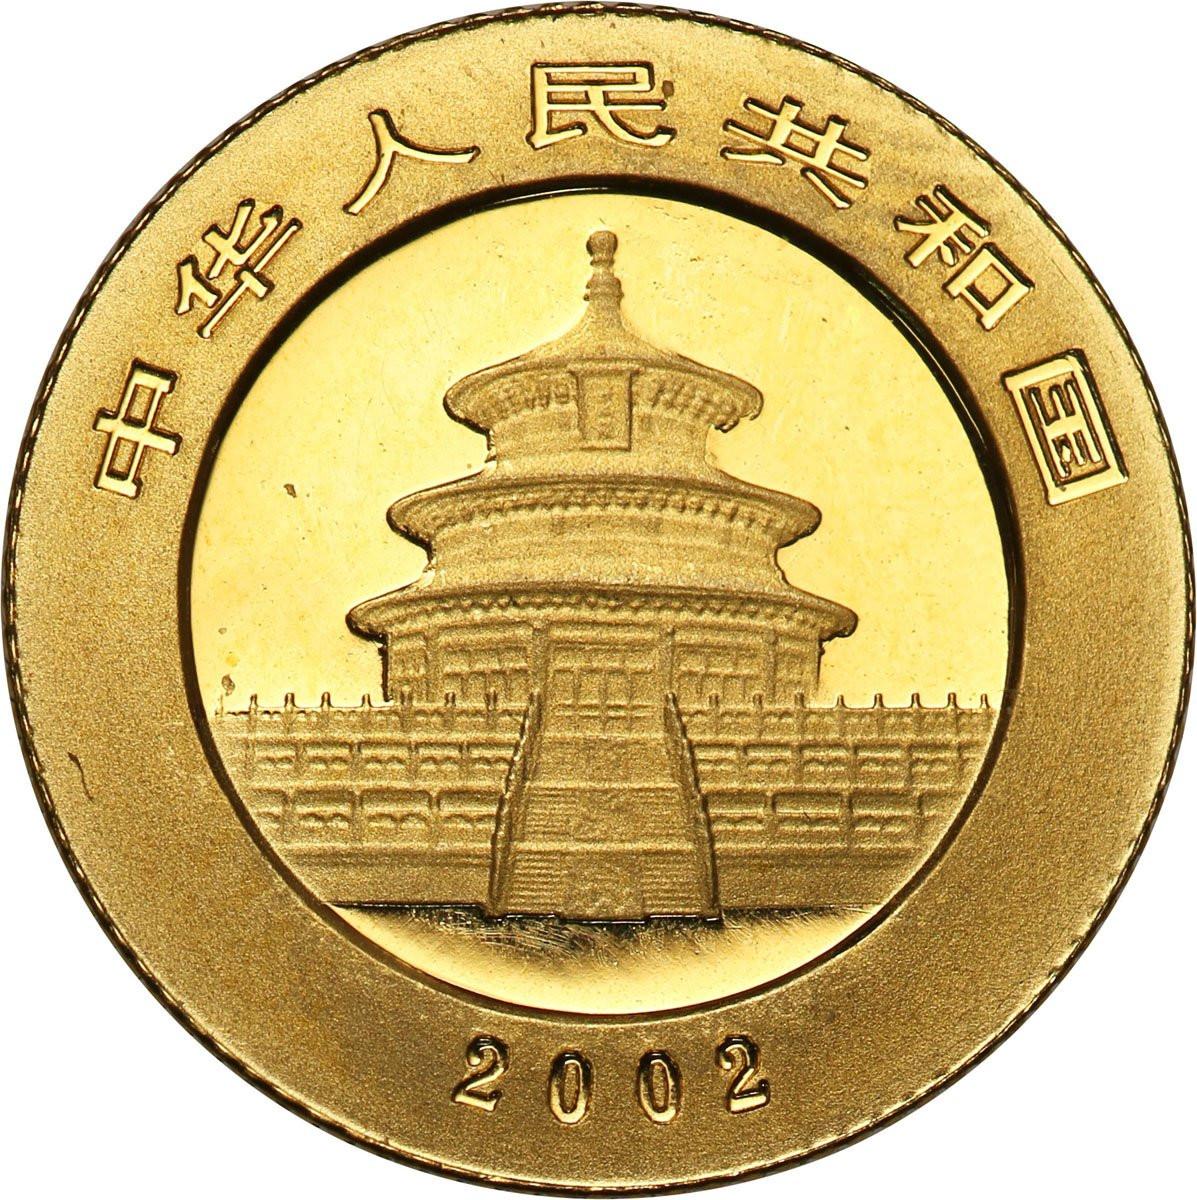 Chiny 20 Yuan 2002 Panda (1/20 uncji Au) st. L